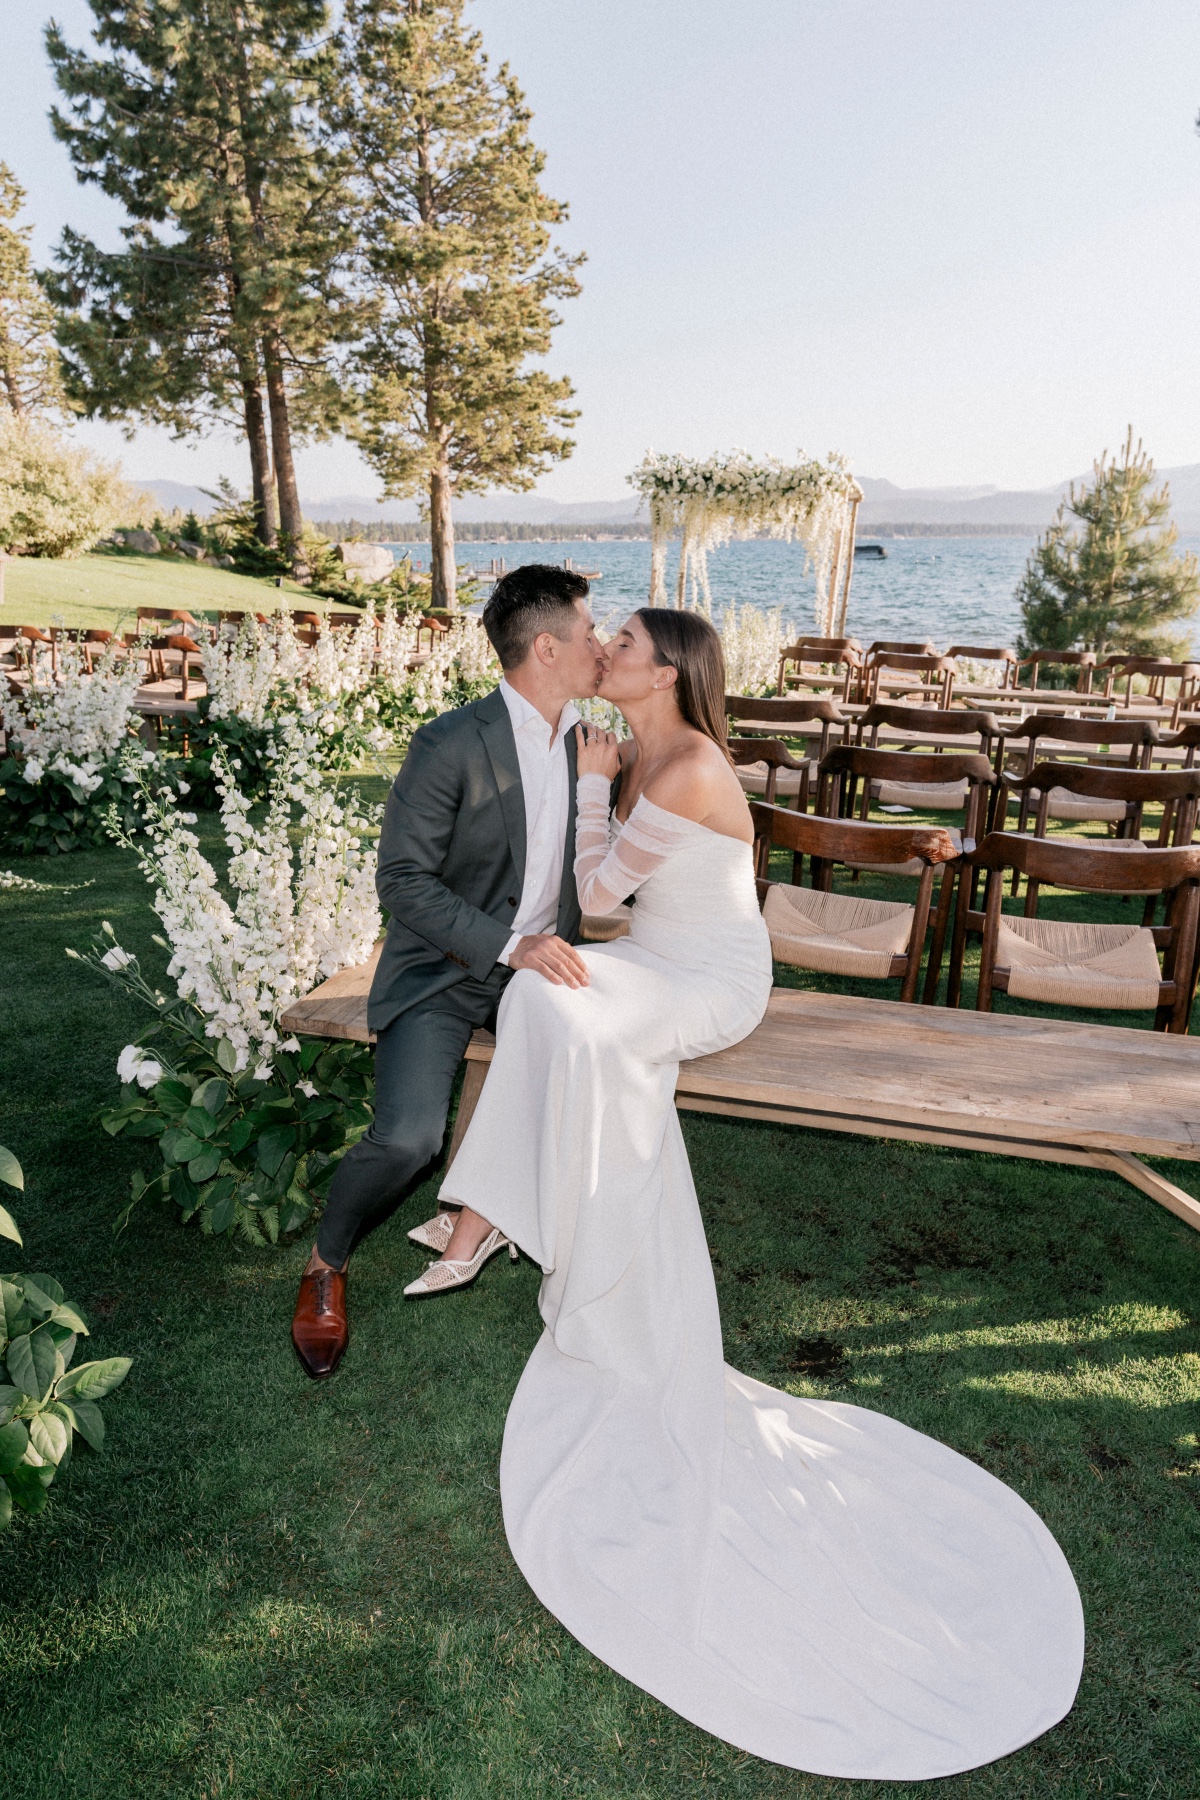 Kiss at Lake Tahoe ceremony 